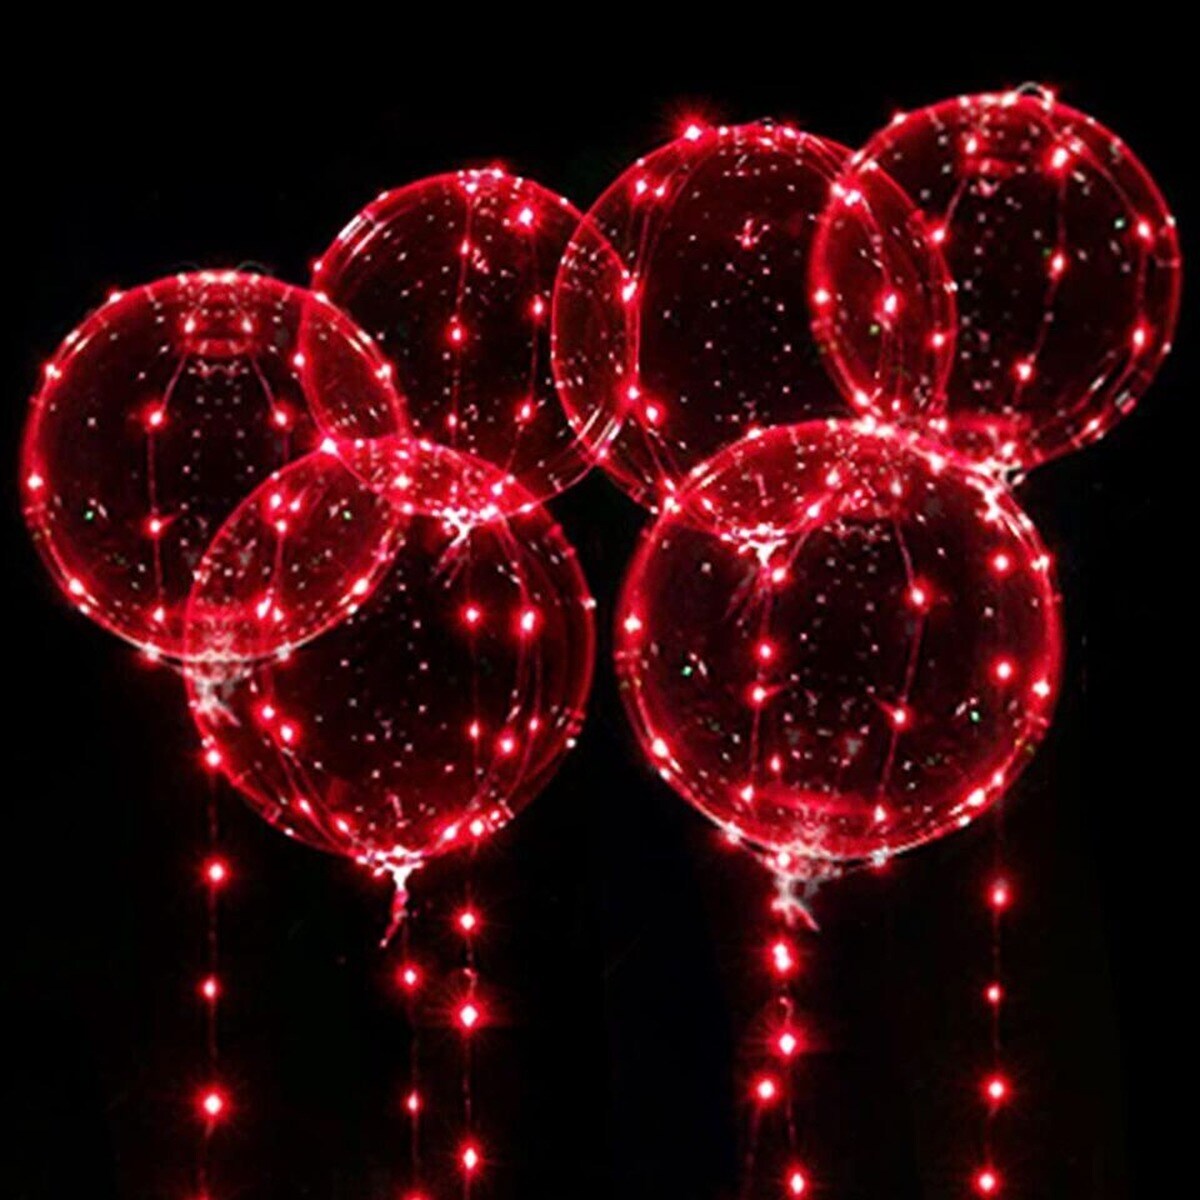 Transparent LED Light Up Balloons 6 packs